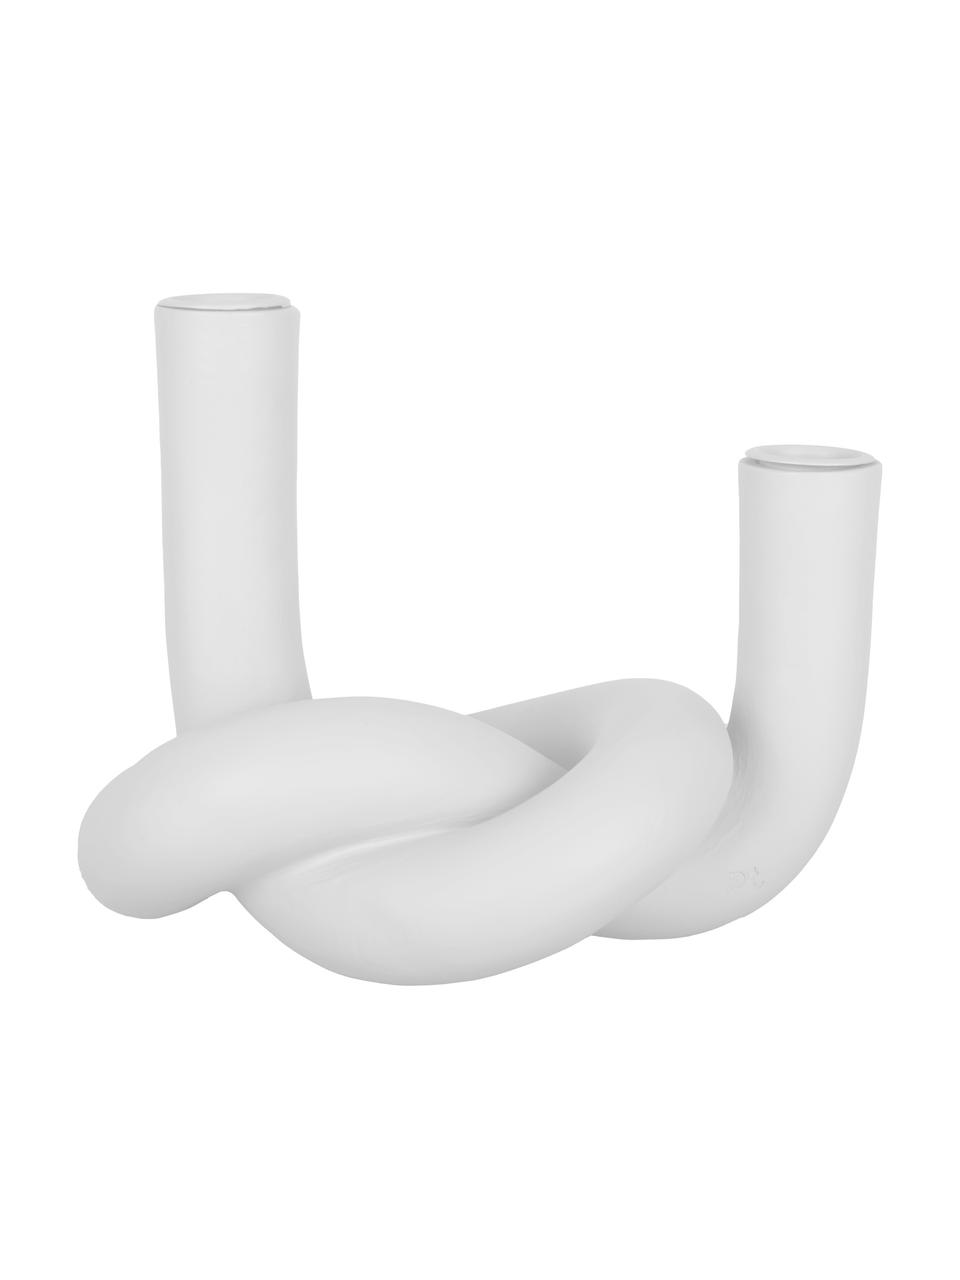 Kerzenhalter Knot aus Keramik in Weiß, Keramik, Weiß, matt, B 19 x H 15 cm